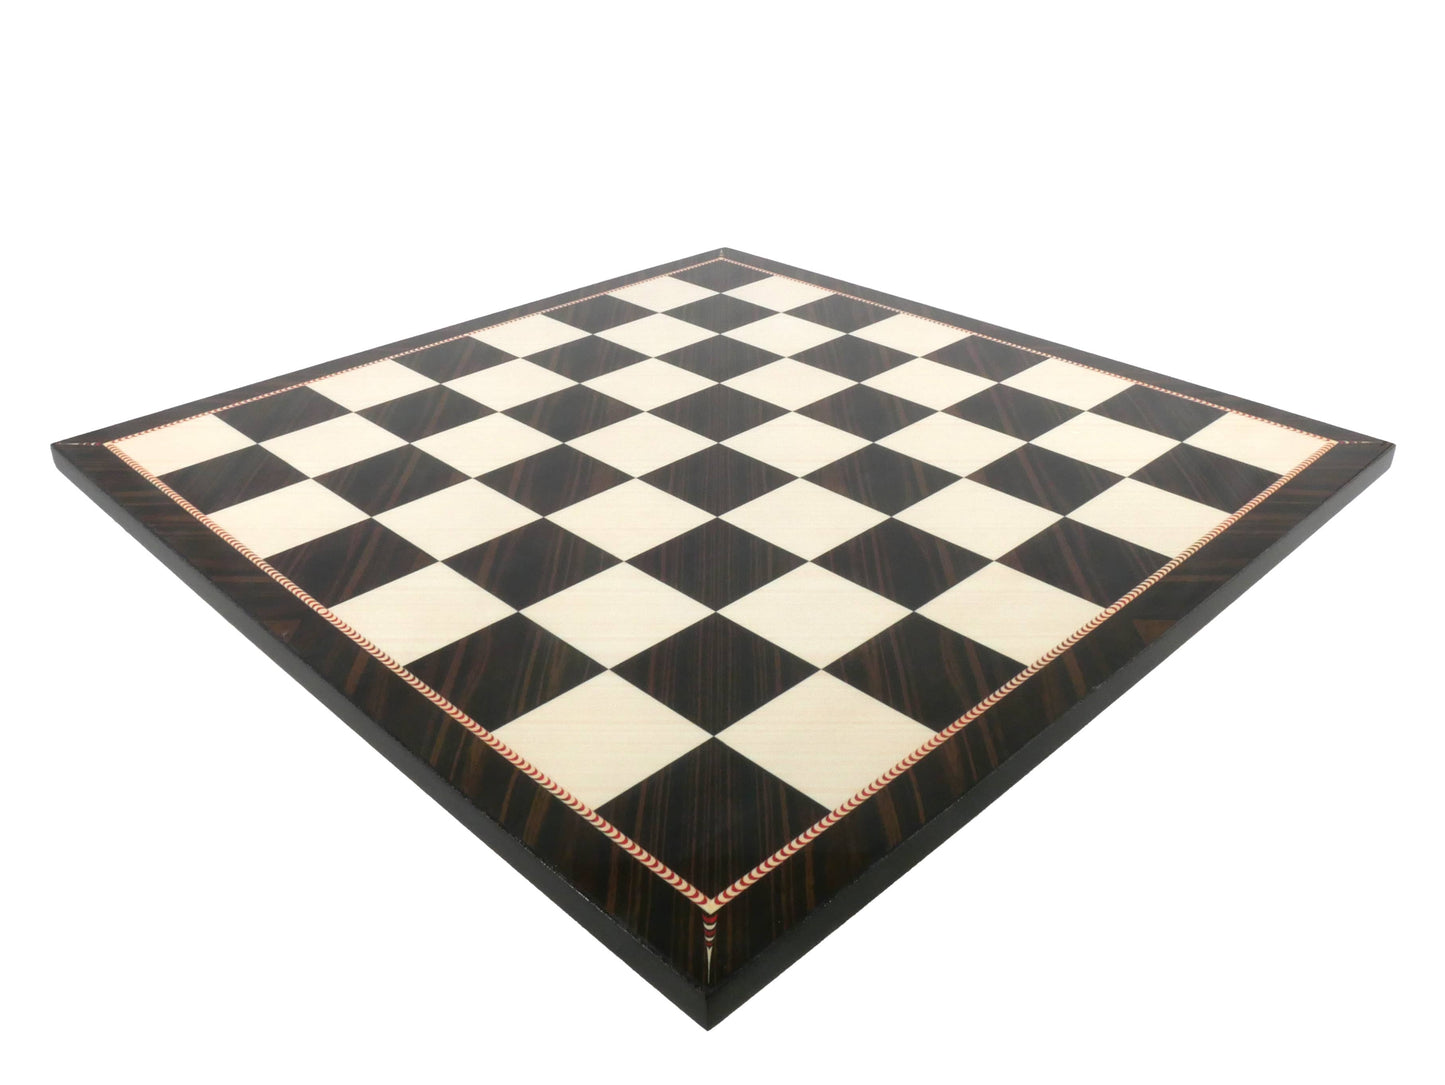 Elegance Decoupage Chess Board